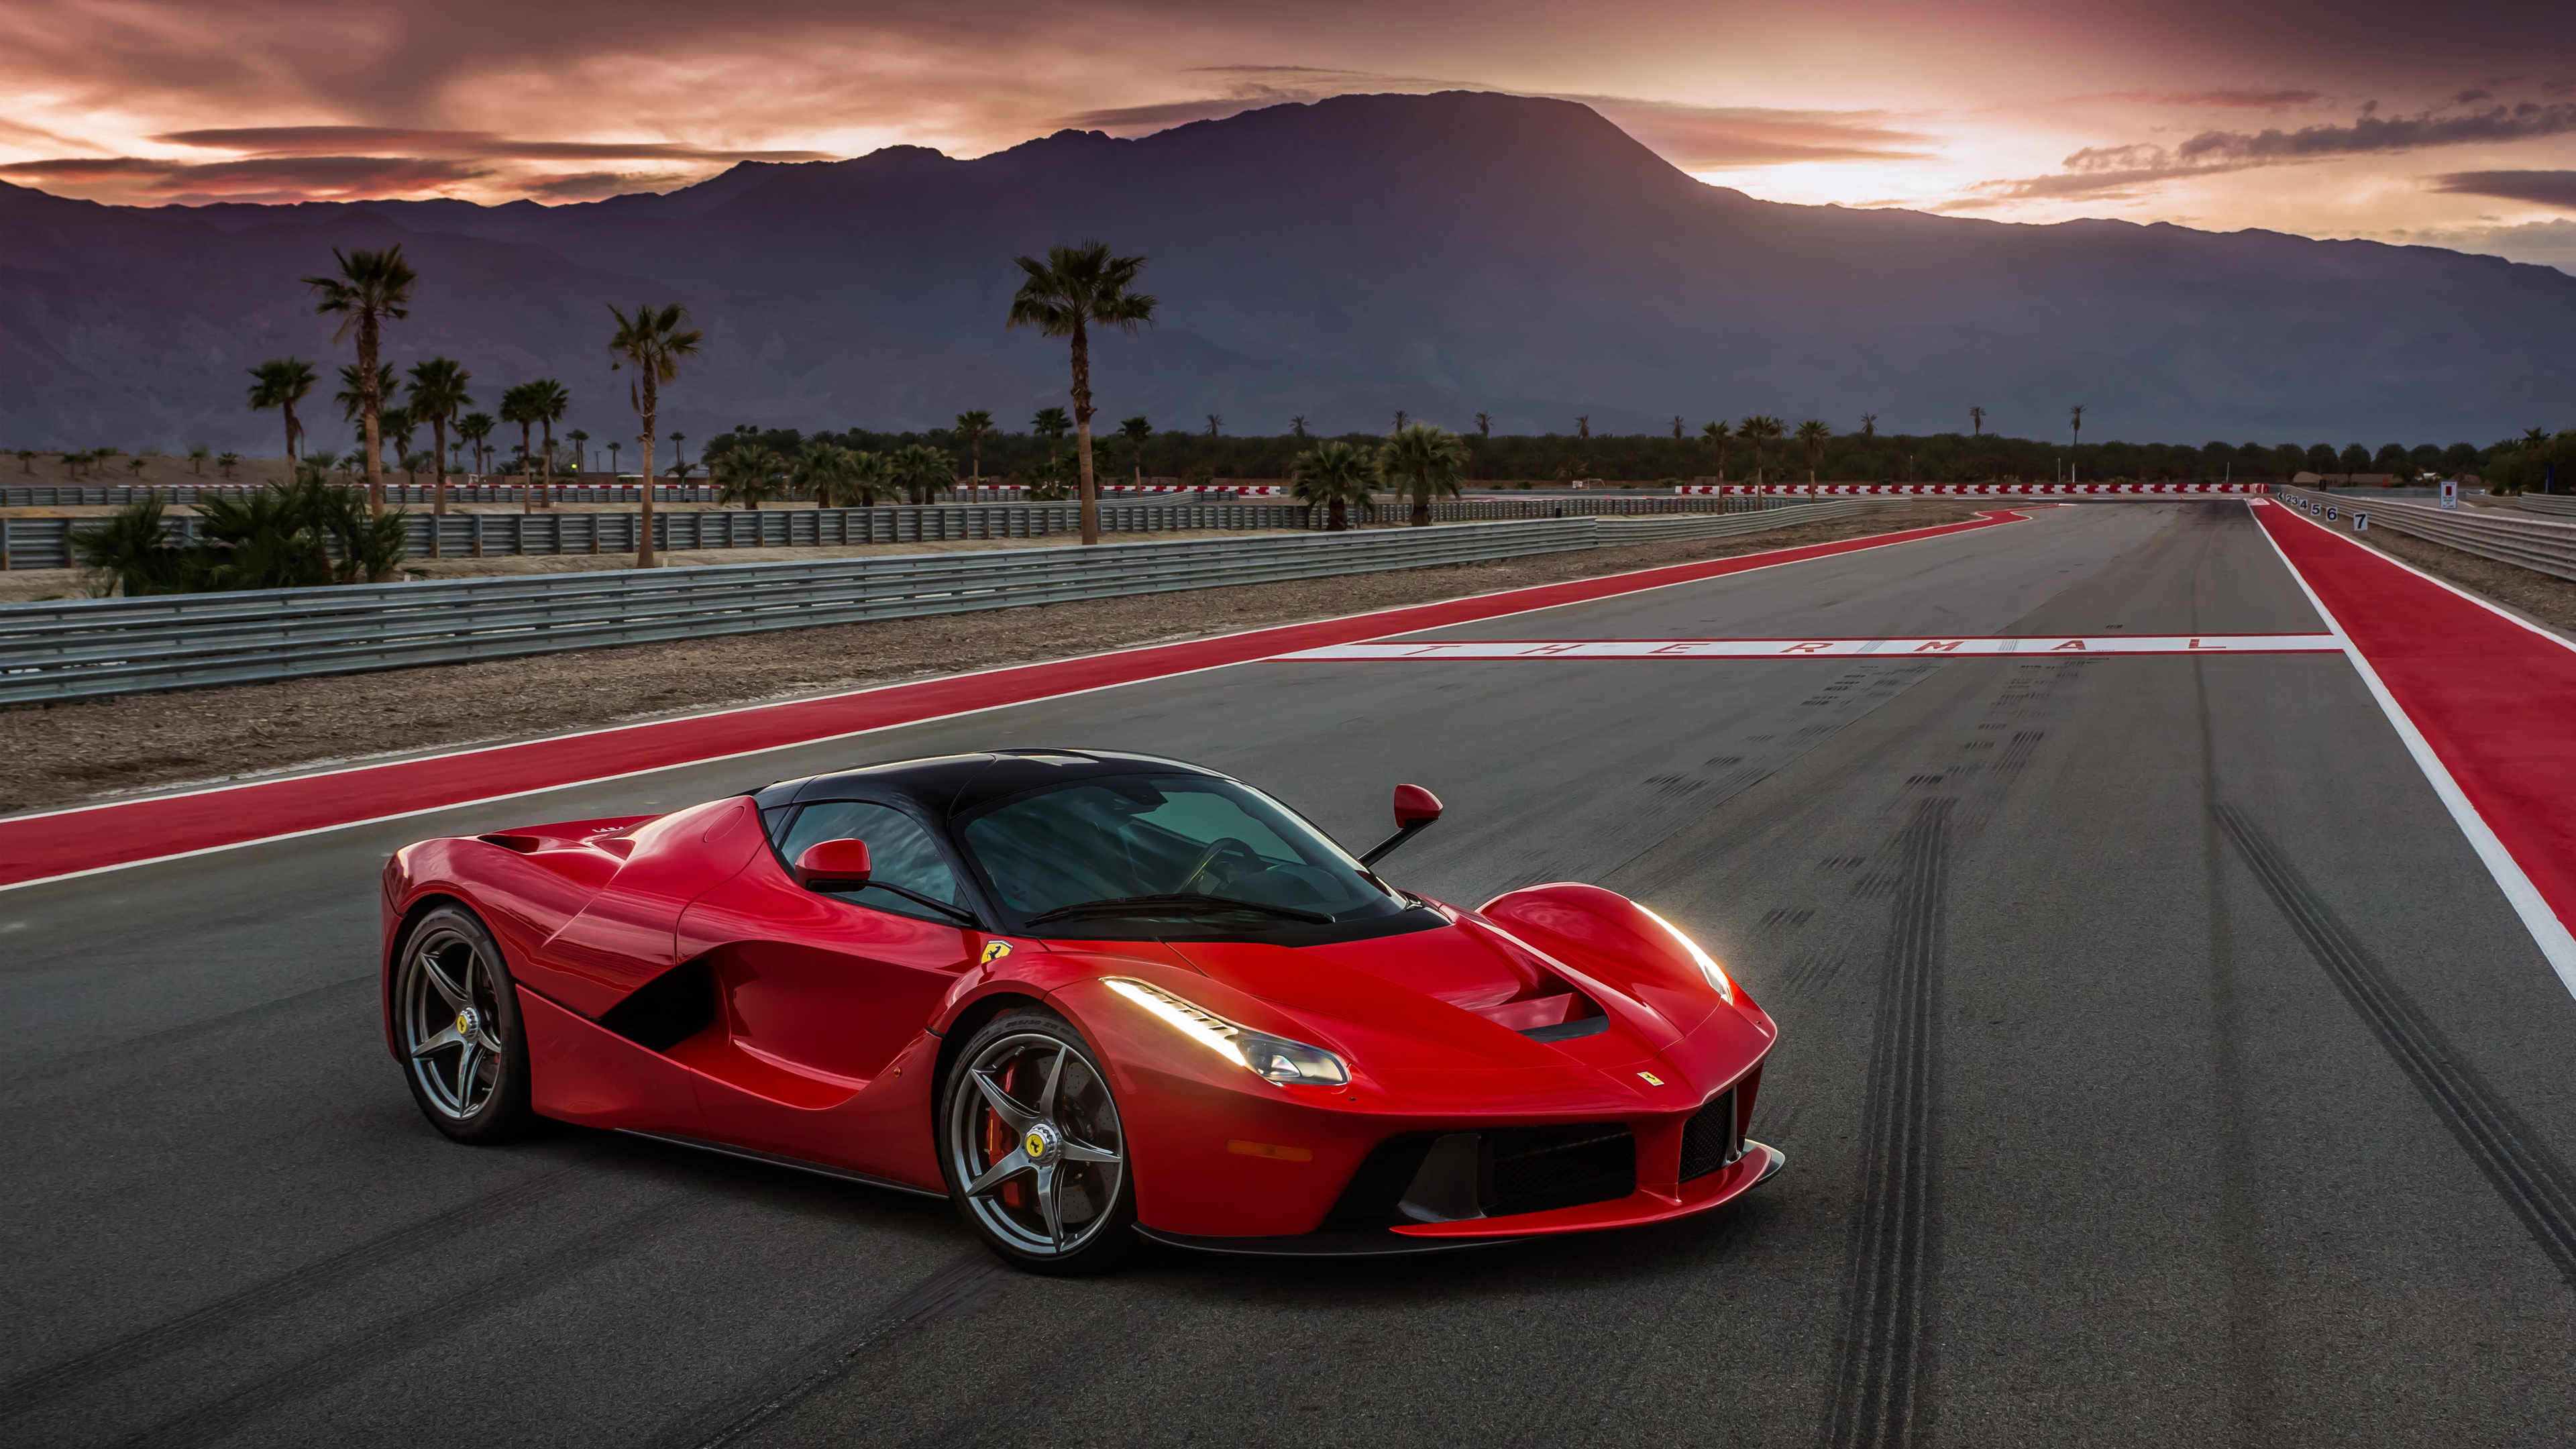 Ferrari Cars Wallpapers Hd For Mobile Phone